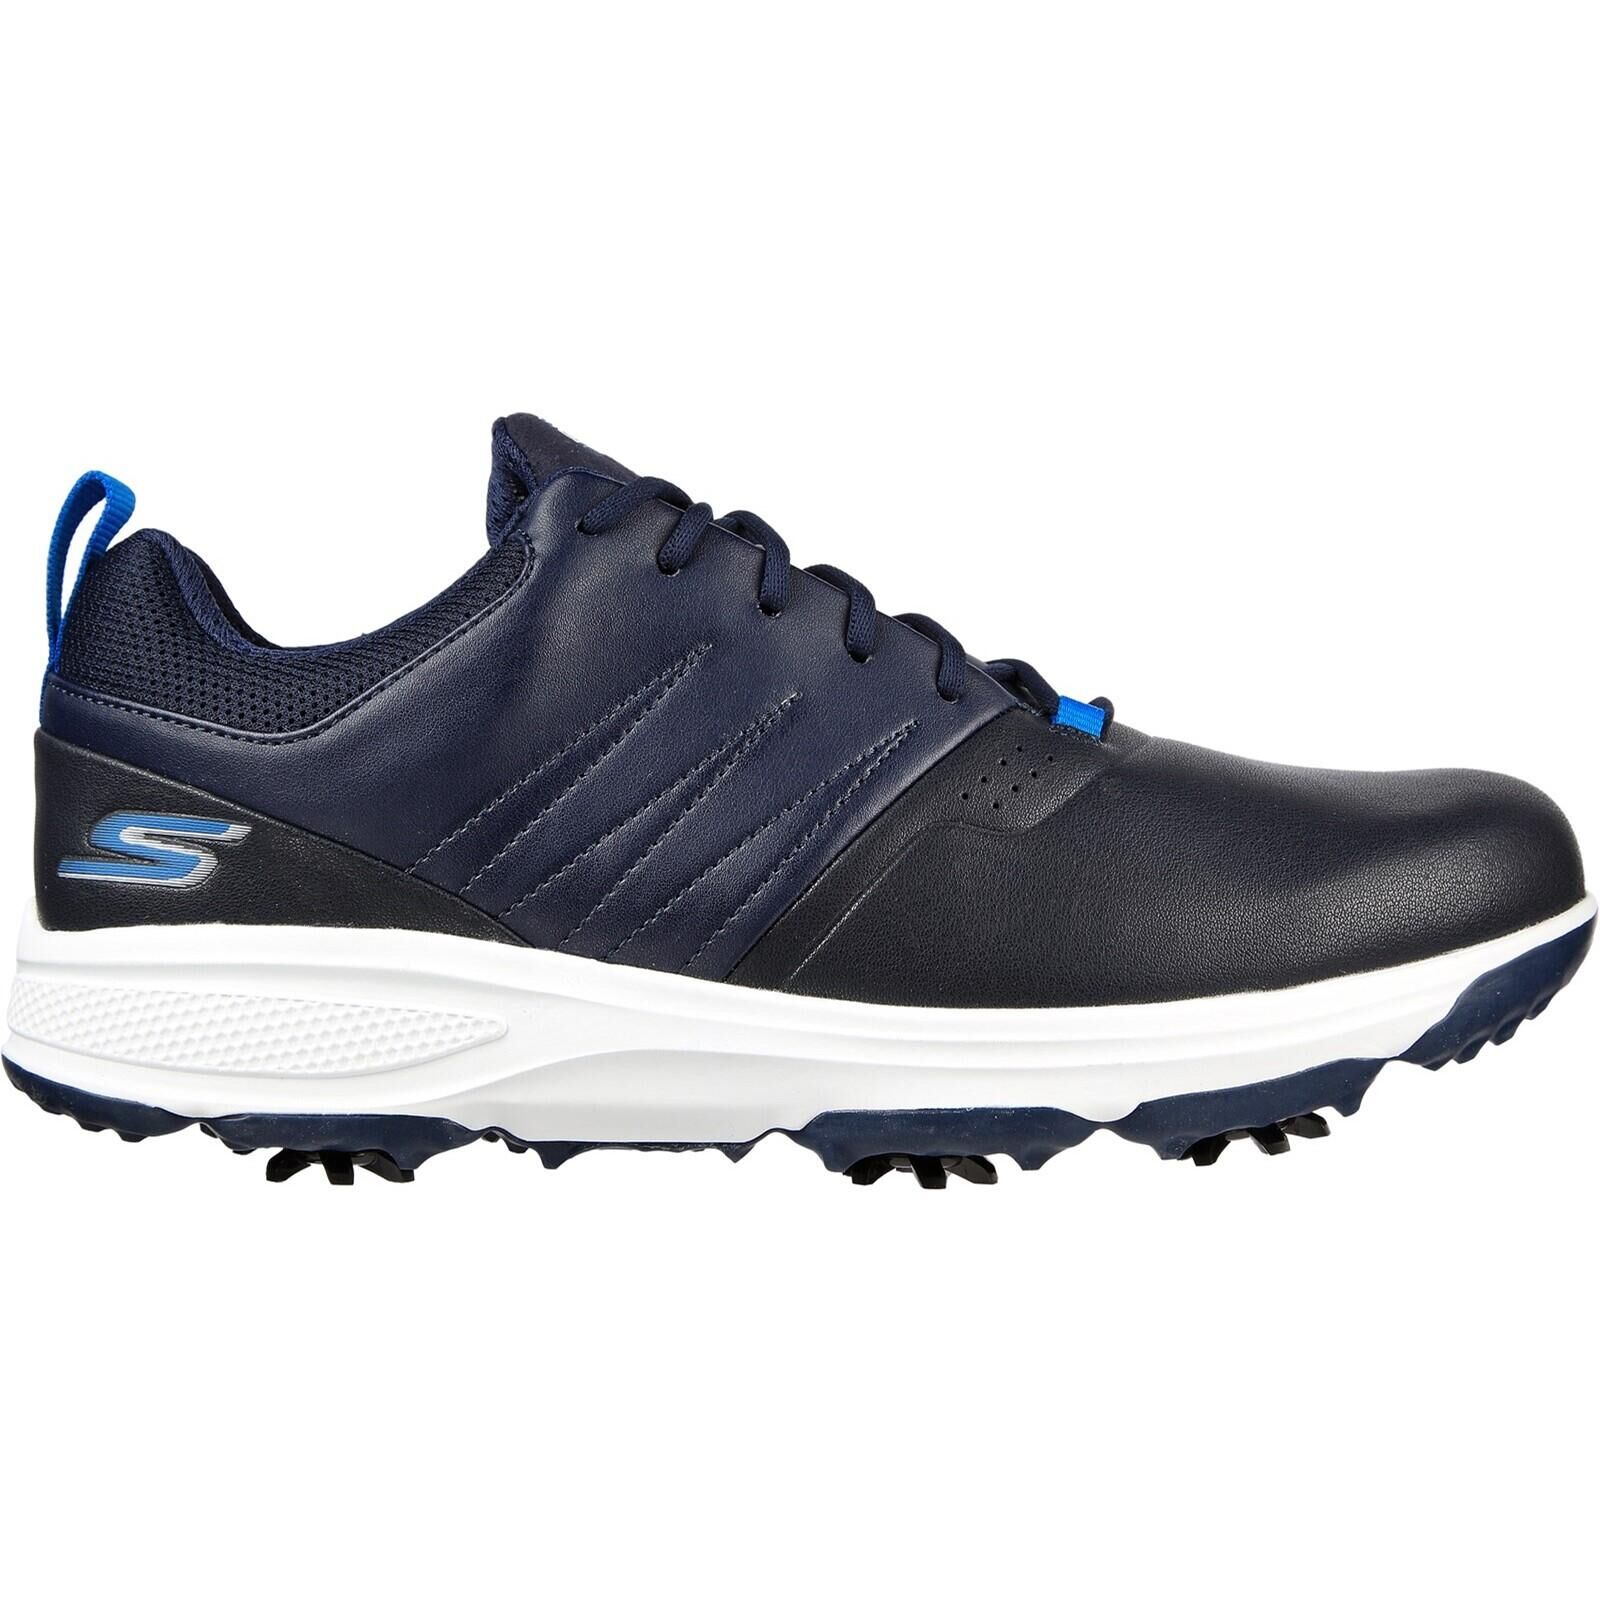 SKECHERS Go Golf Torque Pro Golf Shoes Navy blue